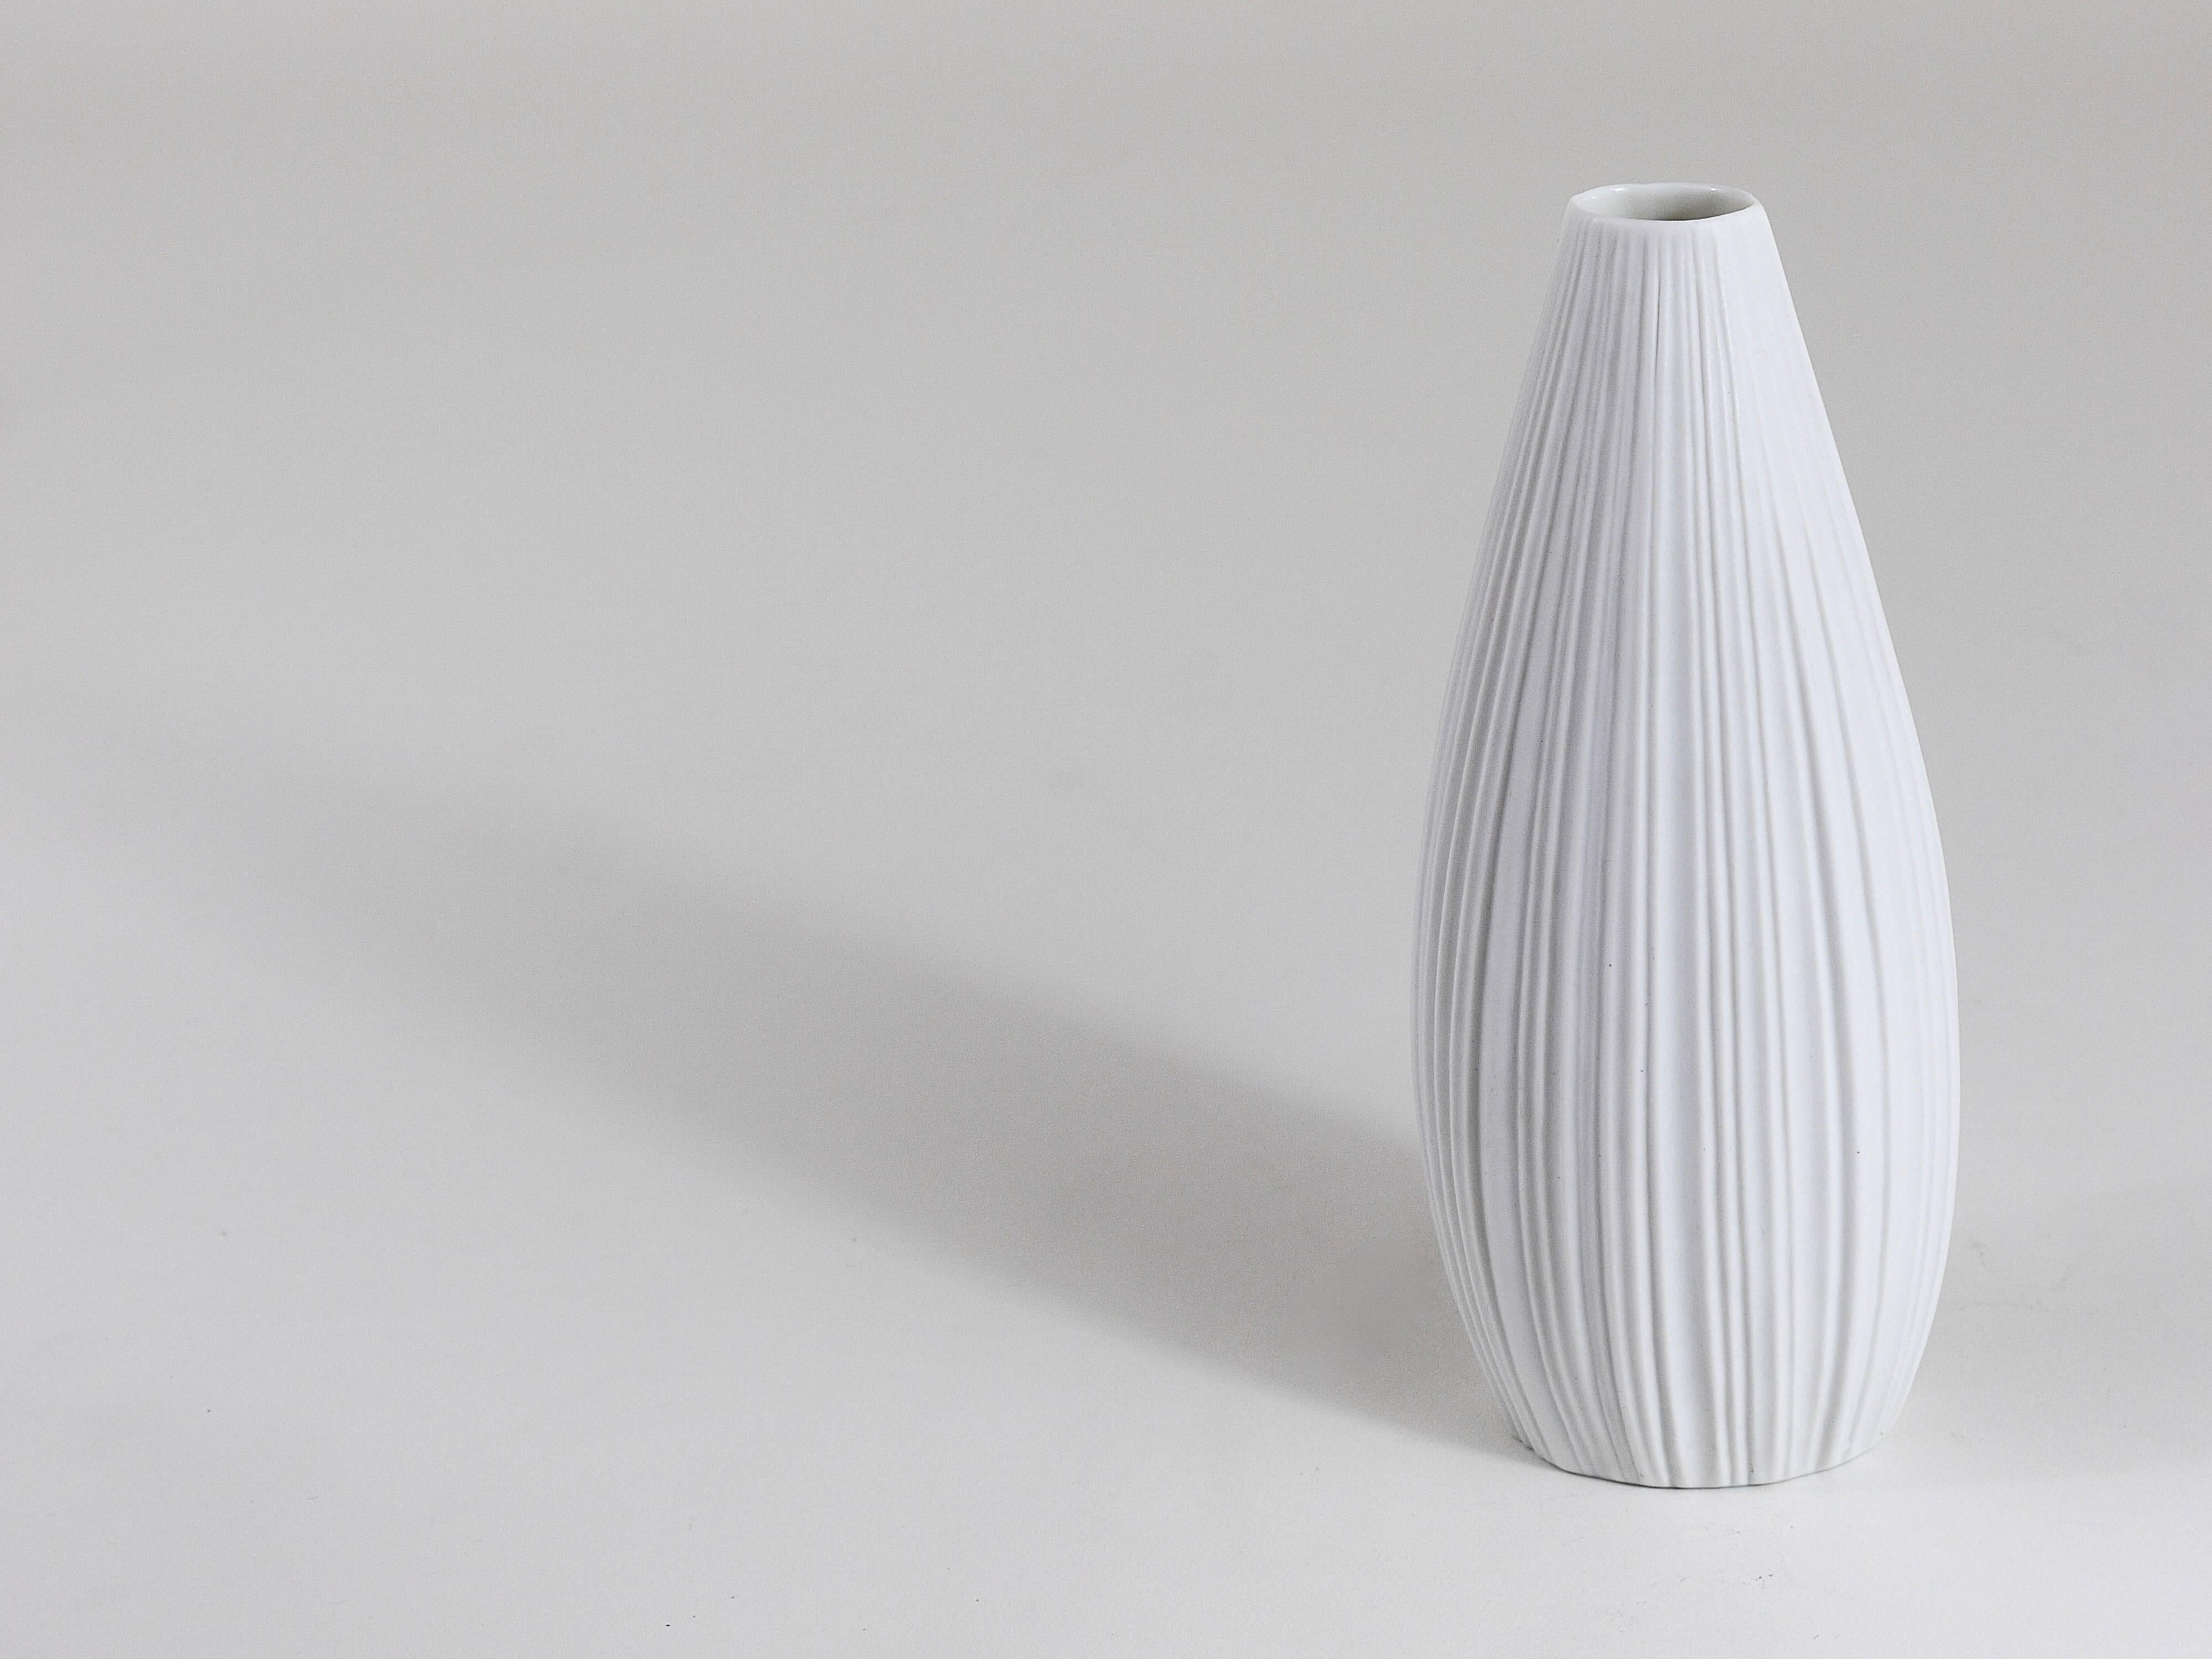 White Relief Striped Porcelain Vase, Martin Freyer, Rosenthal, Germany, 1960s For Sale 2